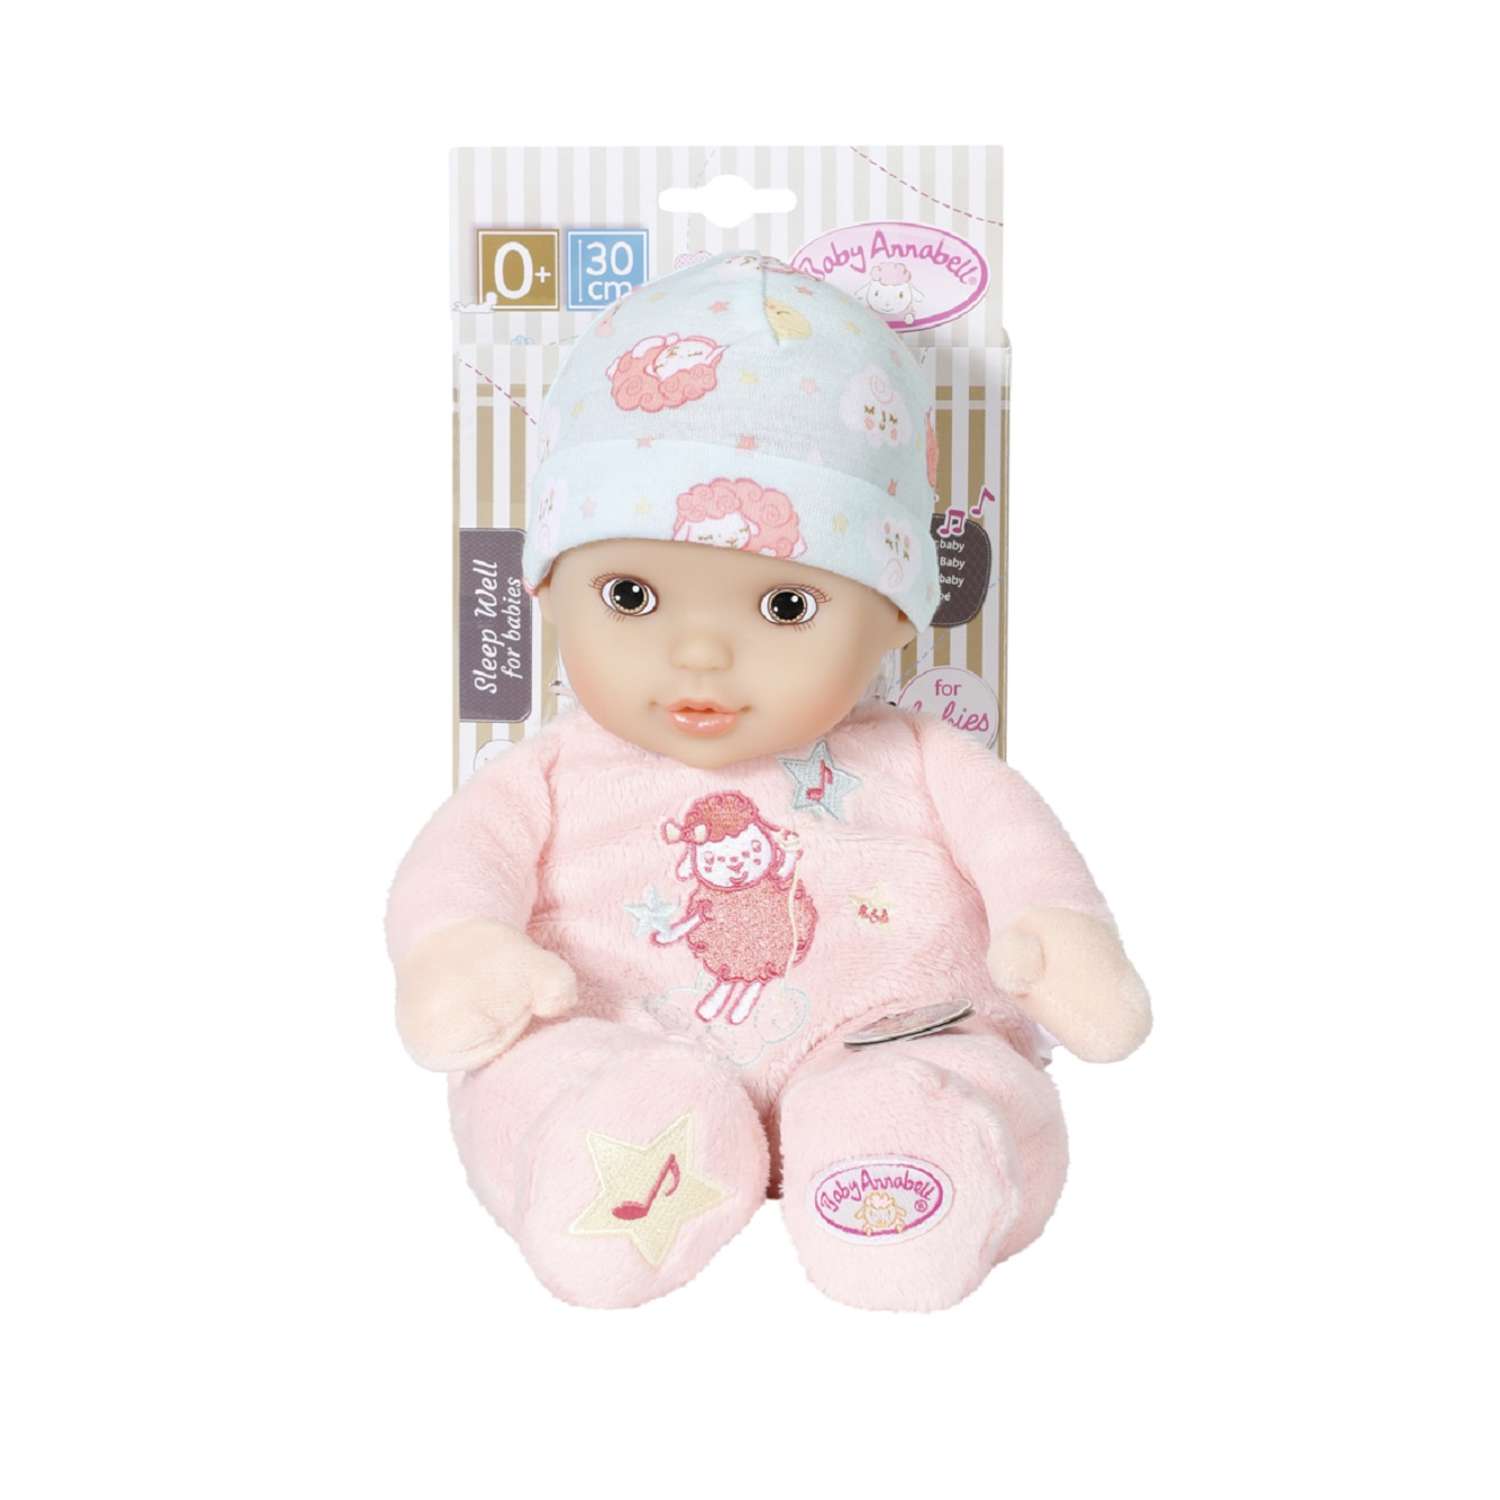 Кукла Zapf Creation Baby Annabell for babies Сладких снов 30 см 702-925 - фото 1